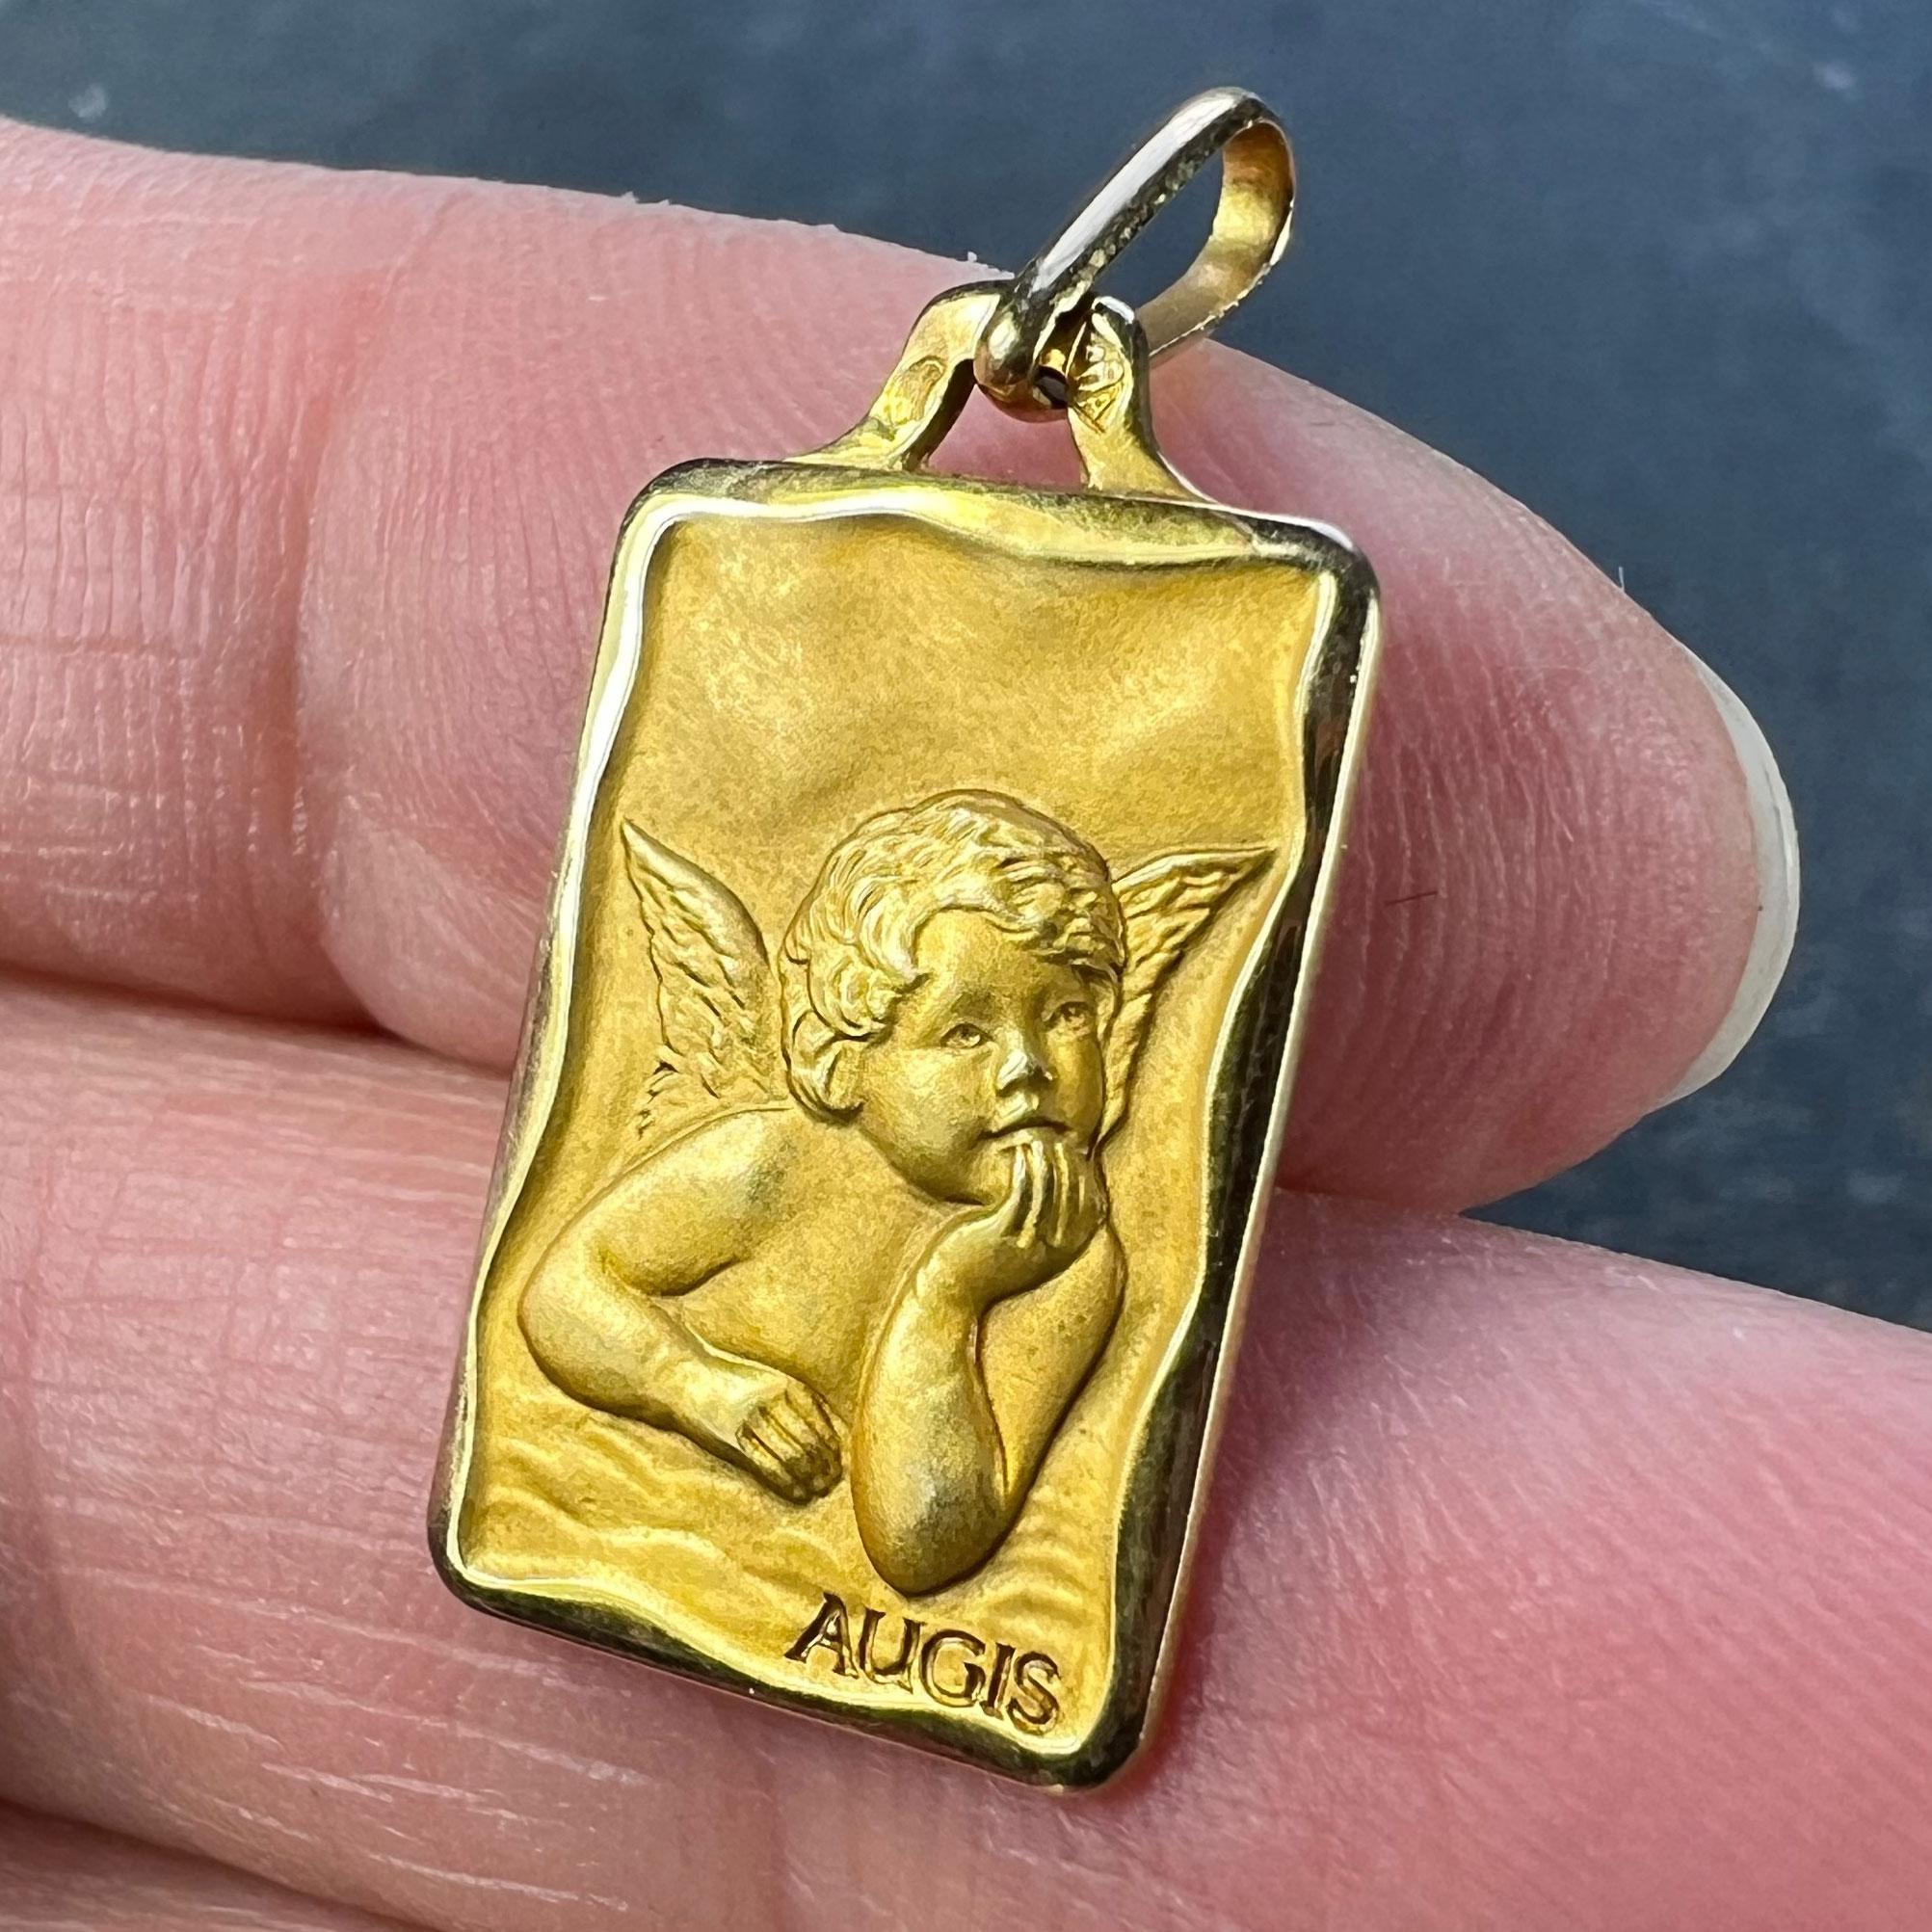 French Augis Raphael’s Cherub 18K Yellow Gold Charm Pendant For Sale 2